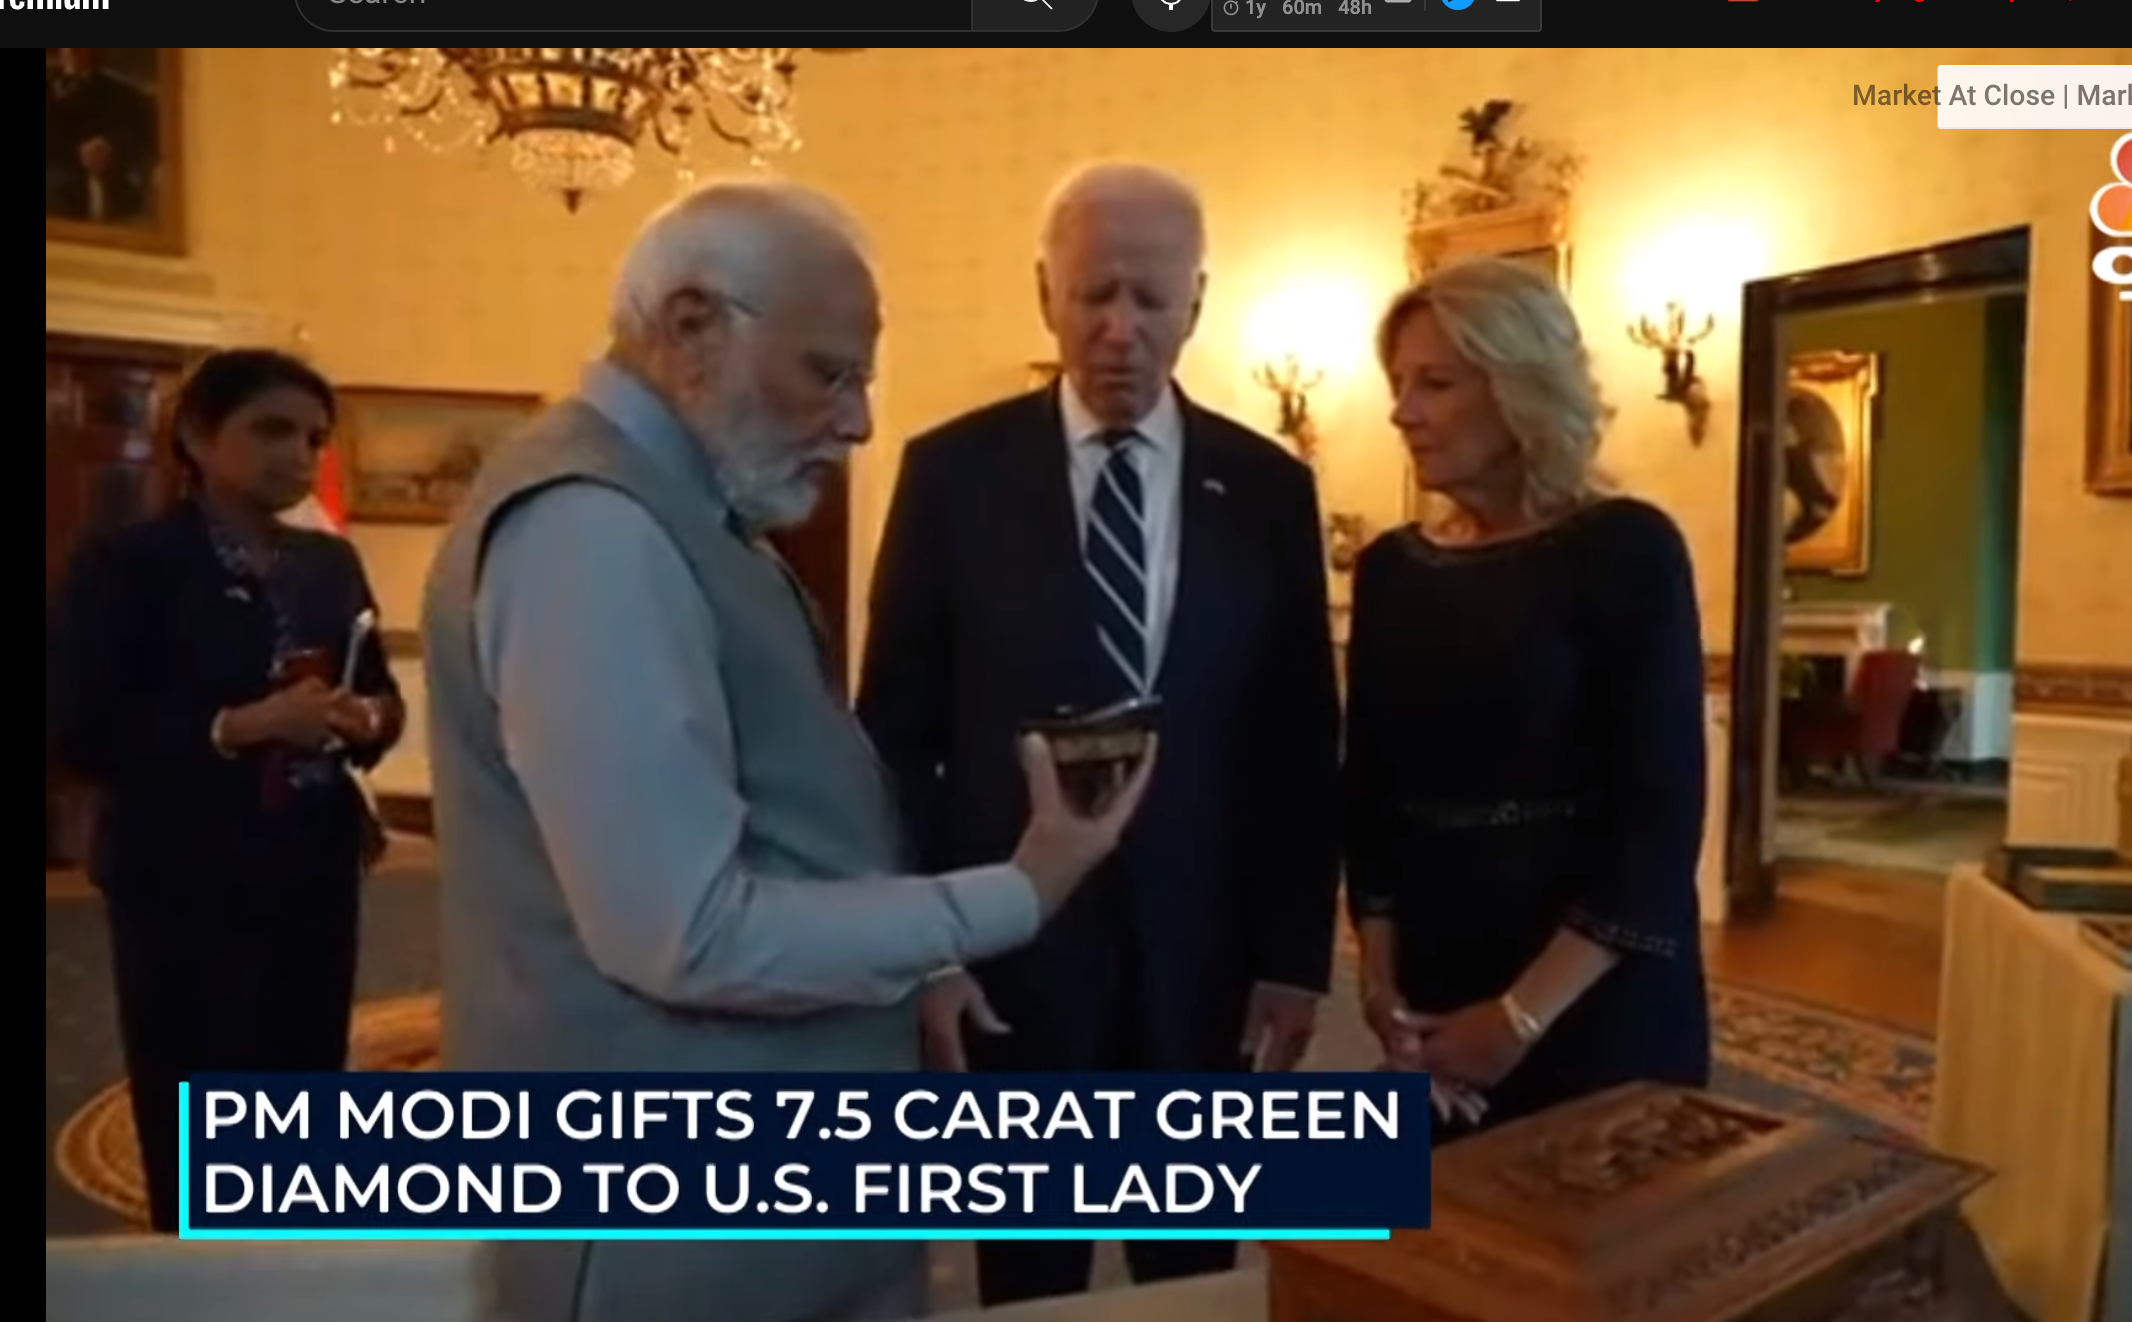 PM Modi gifts U.S.A's First Lady Jill Biden a 7.5-carat diamond